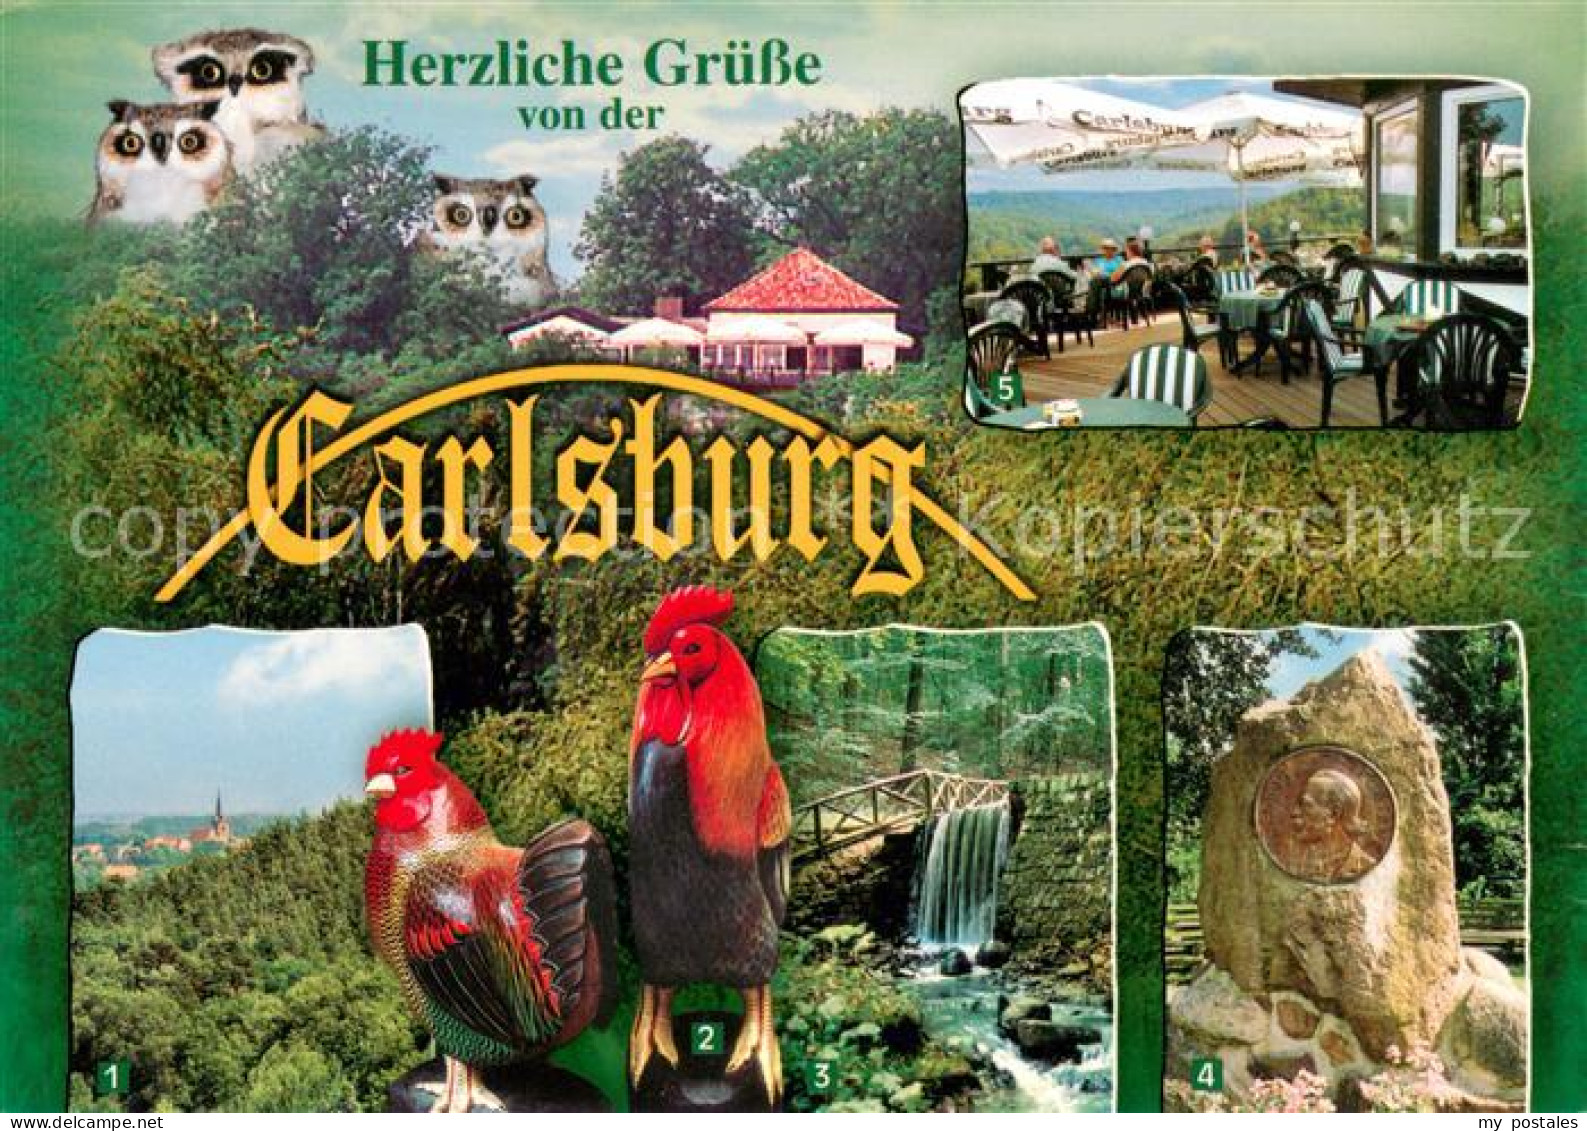 73643875 Falkenberg Mark Carlsburg Historisches Panoramarestaurant Erlebniswelt  - Falkenberg (Mark)